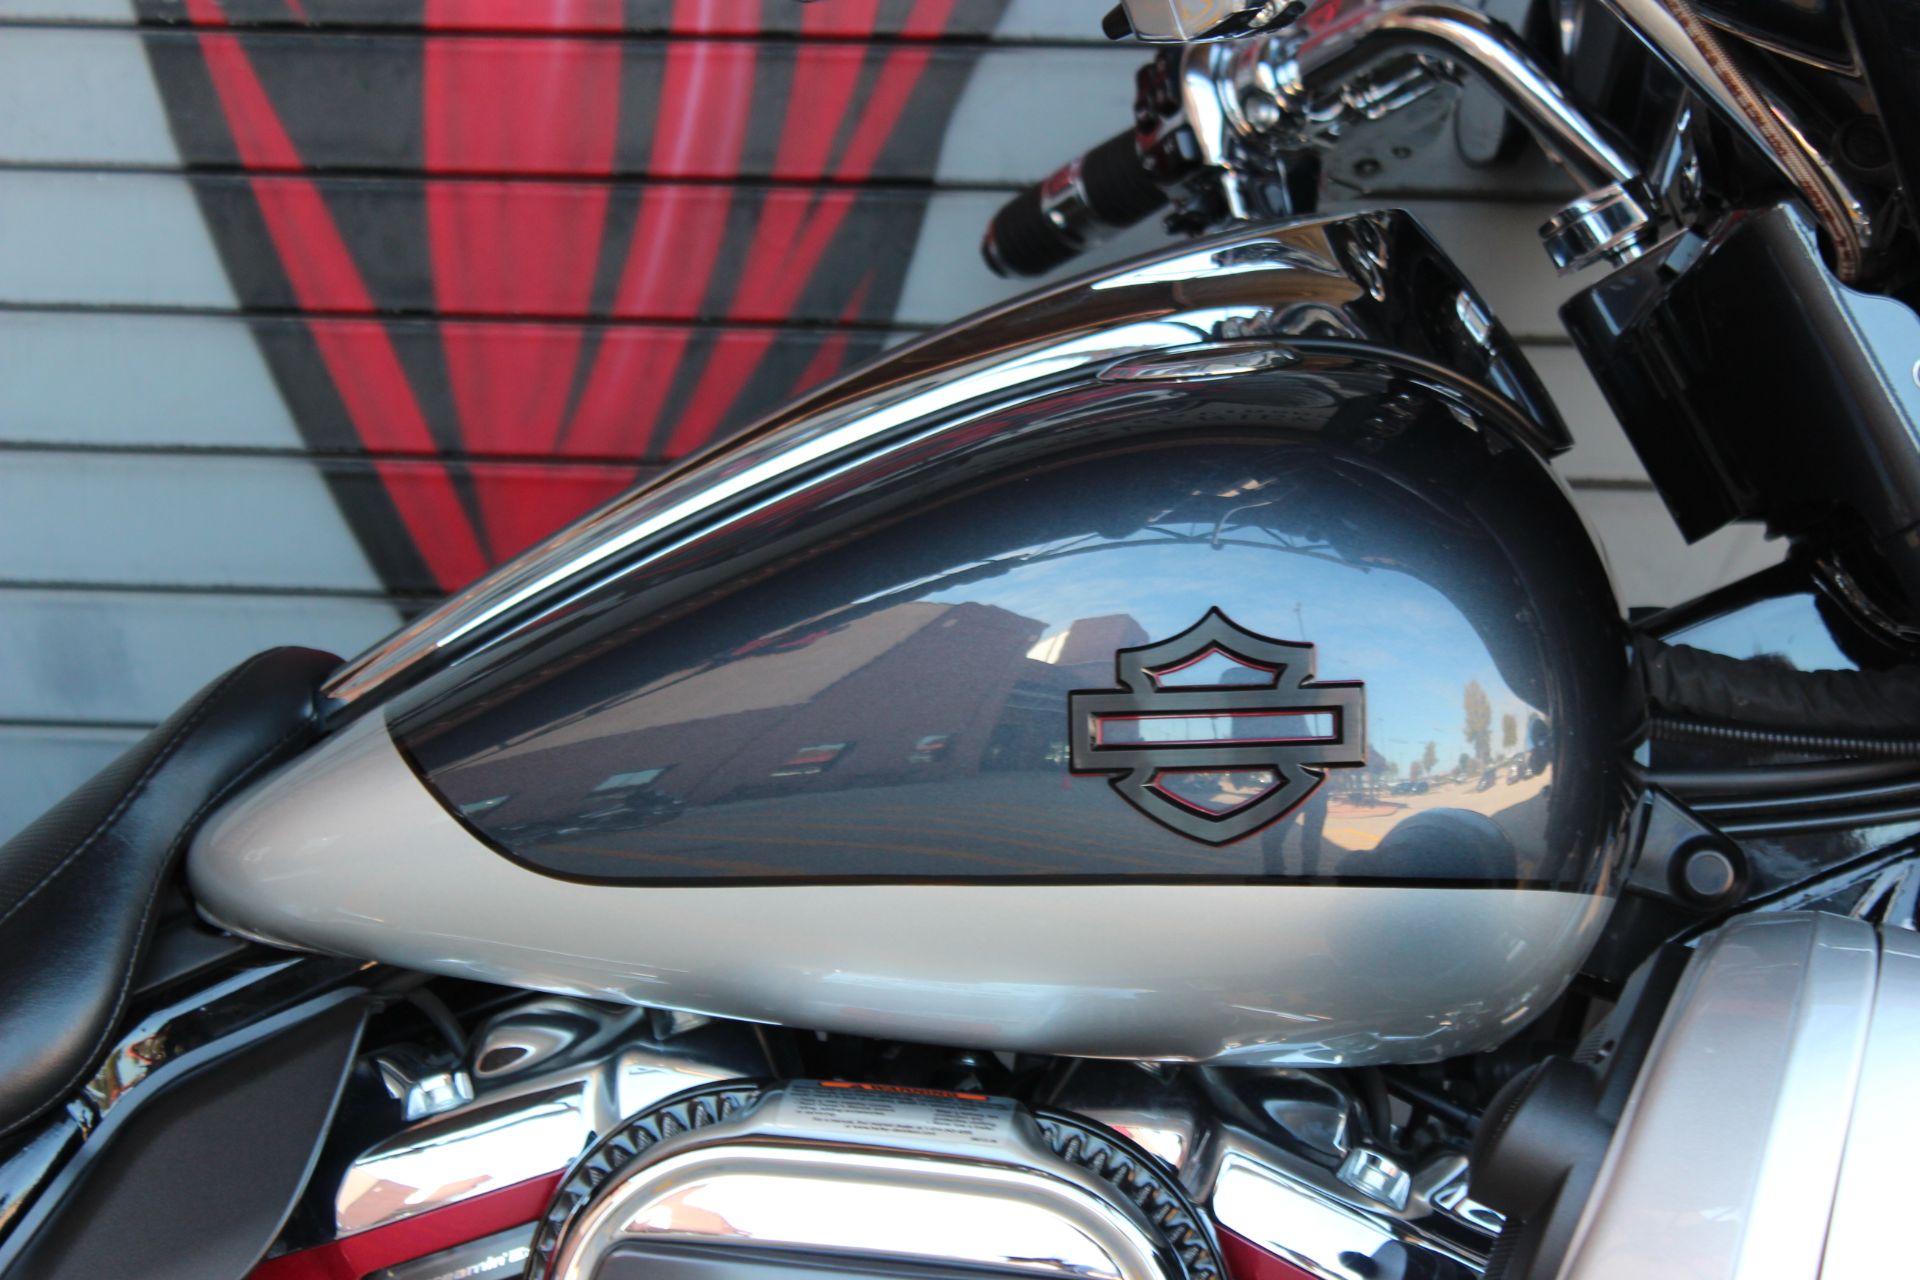 2019 Harley-Davidson CVO™ Street Glide® in Carrollton, Texas - Photo 6